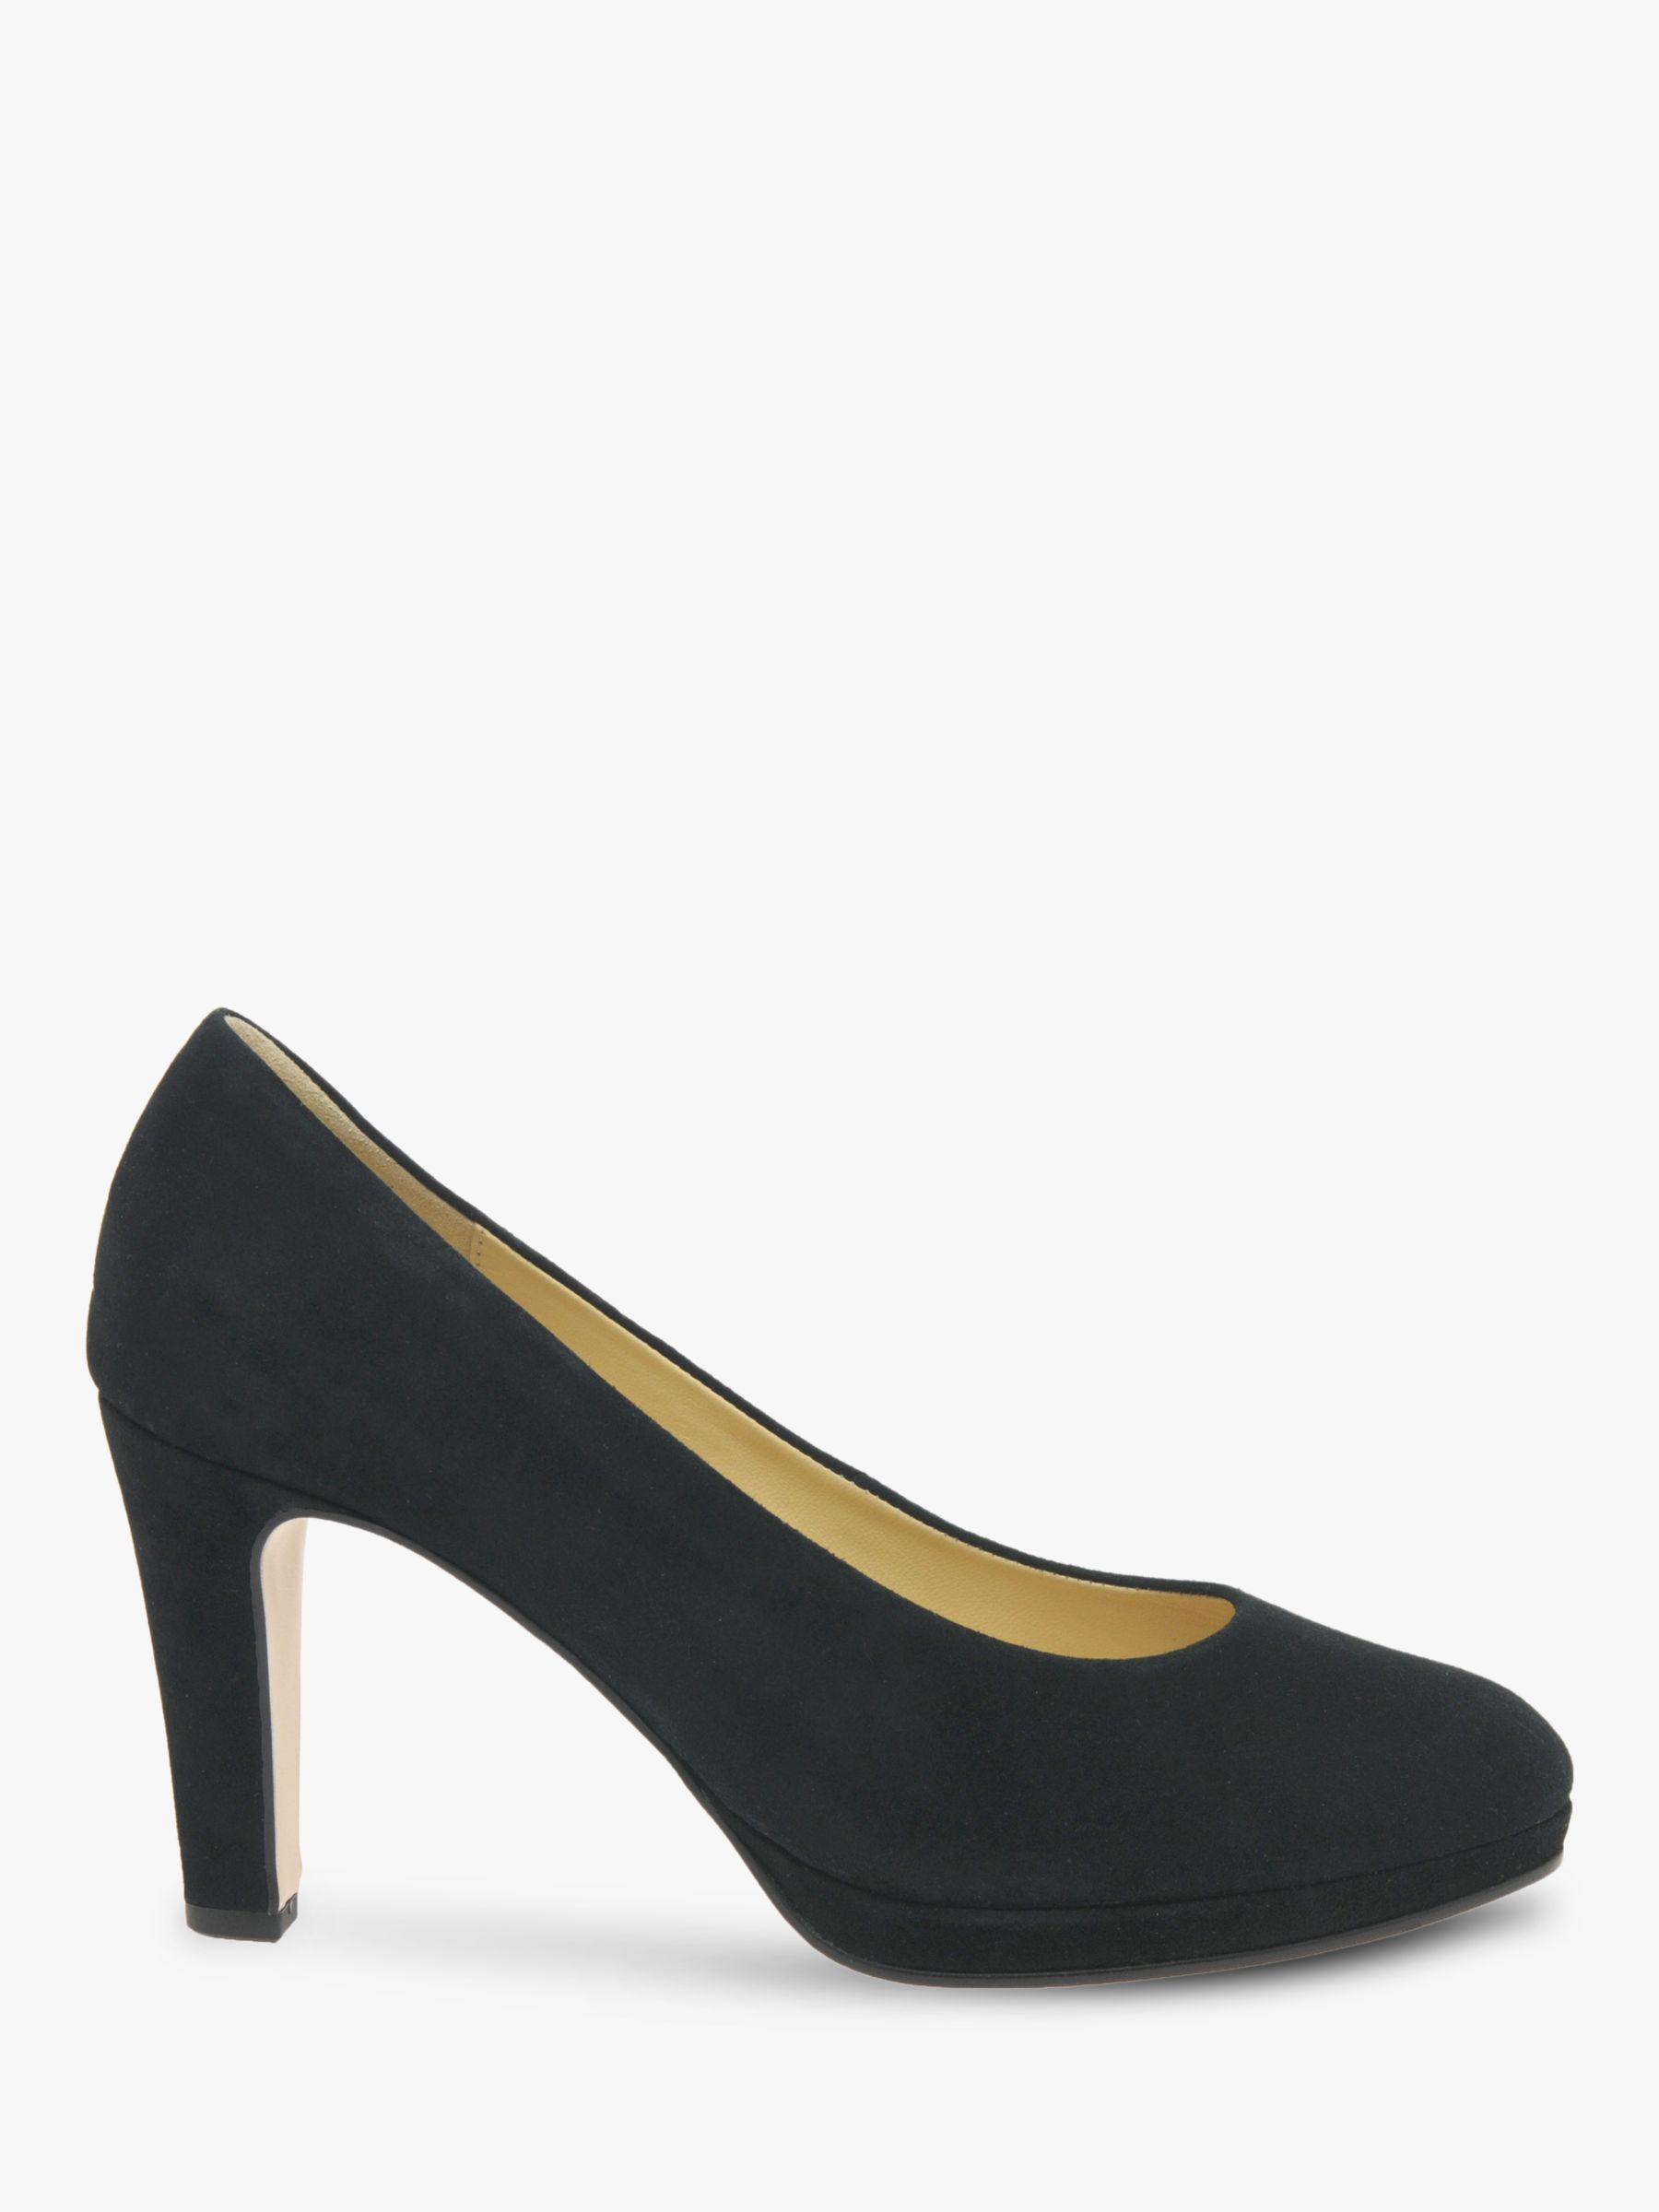 Gabor Splendid Block Heeled Court Shoes, Black